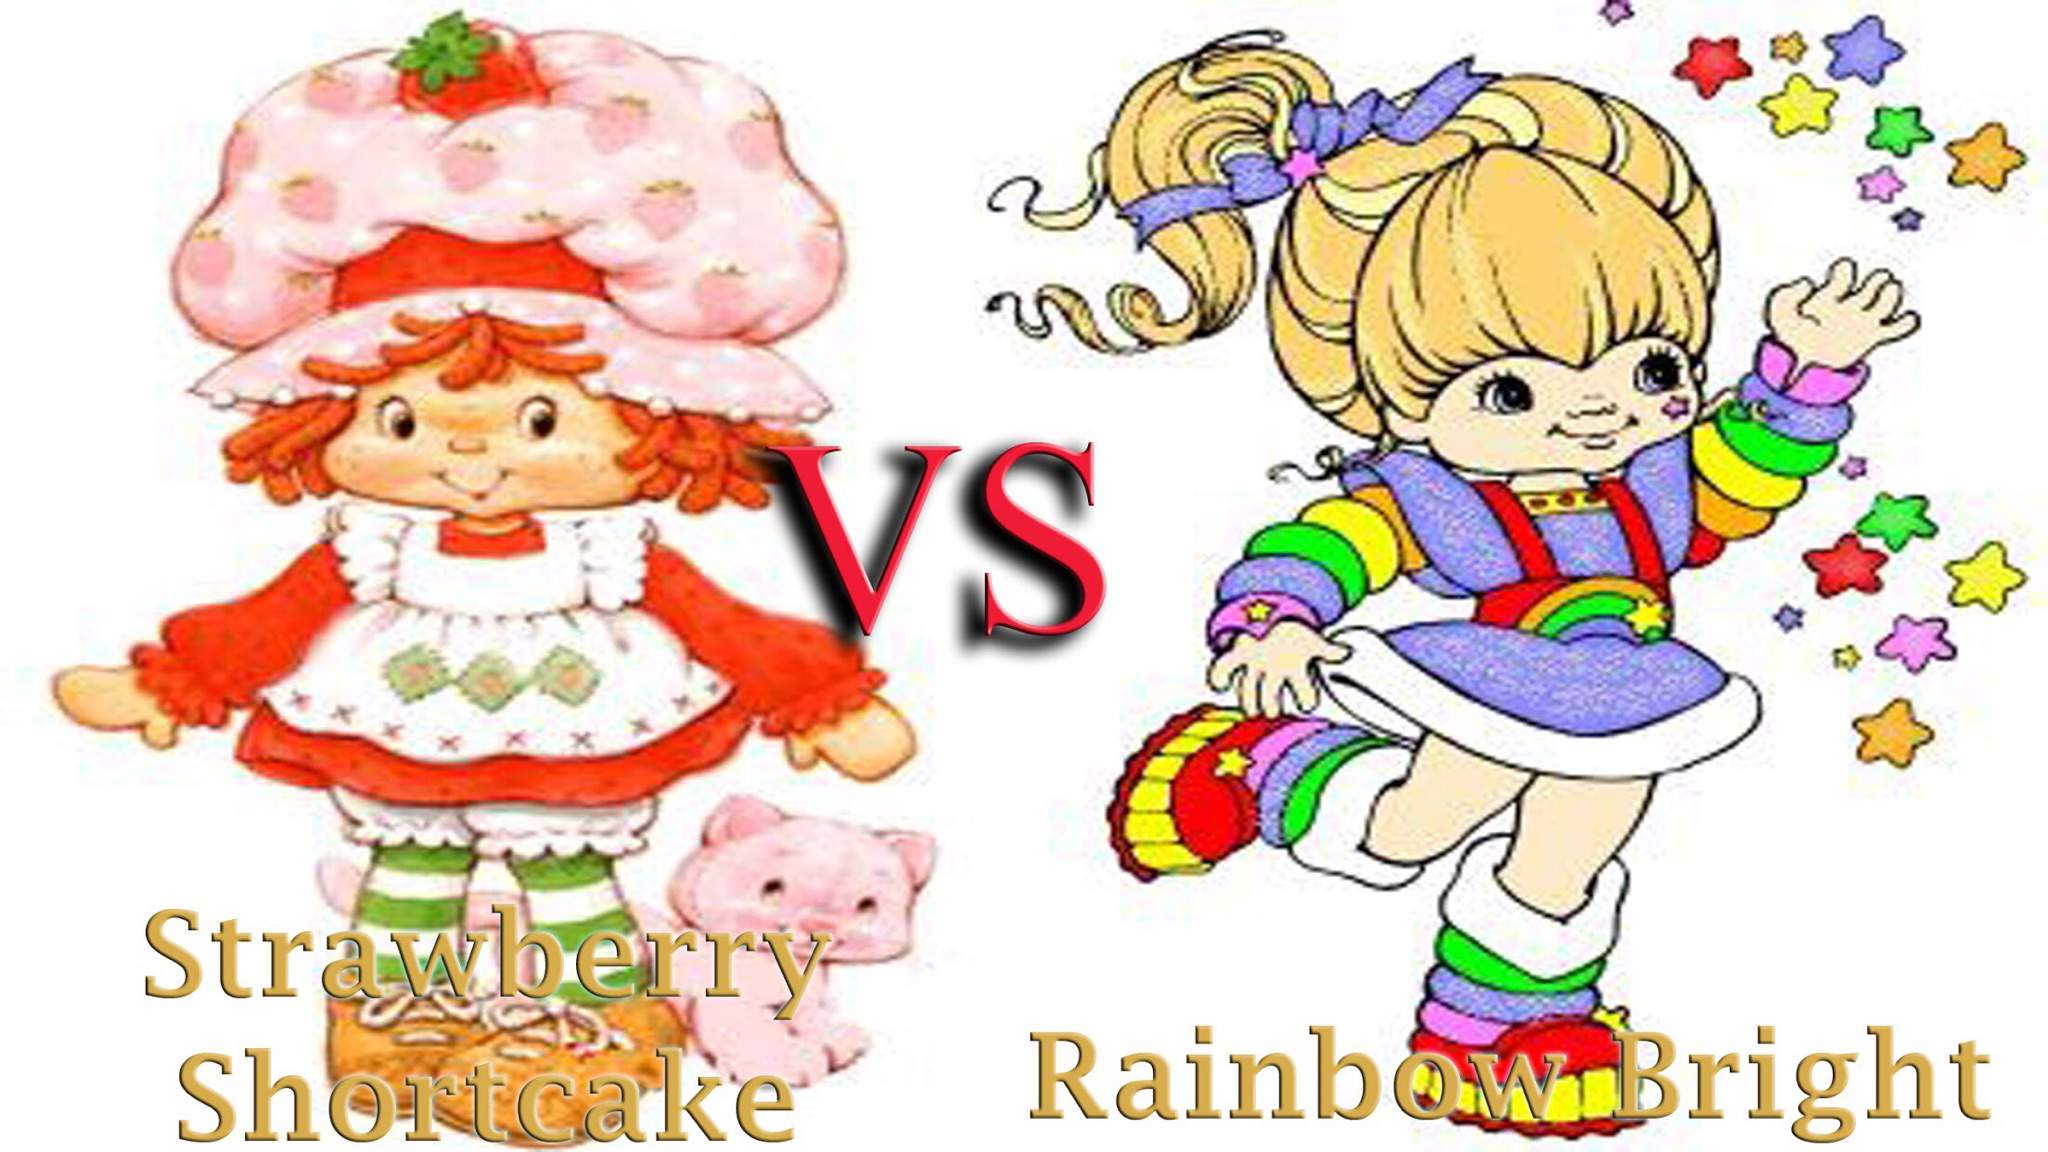 Strawberry Shortcake VS Rainbow Brite Battle Arena Amino Amino.